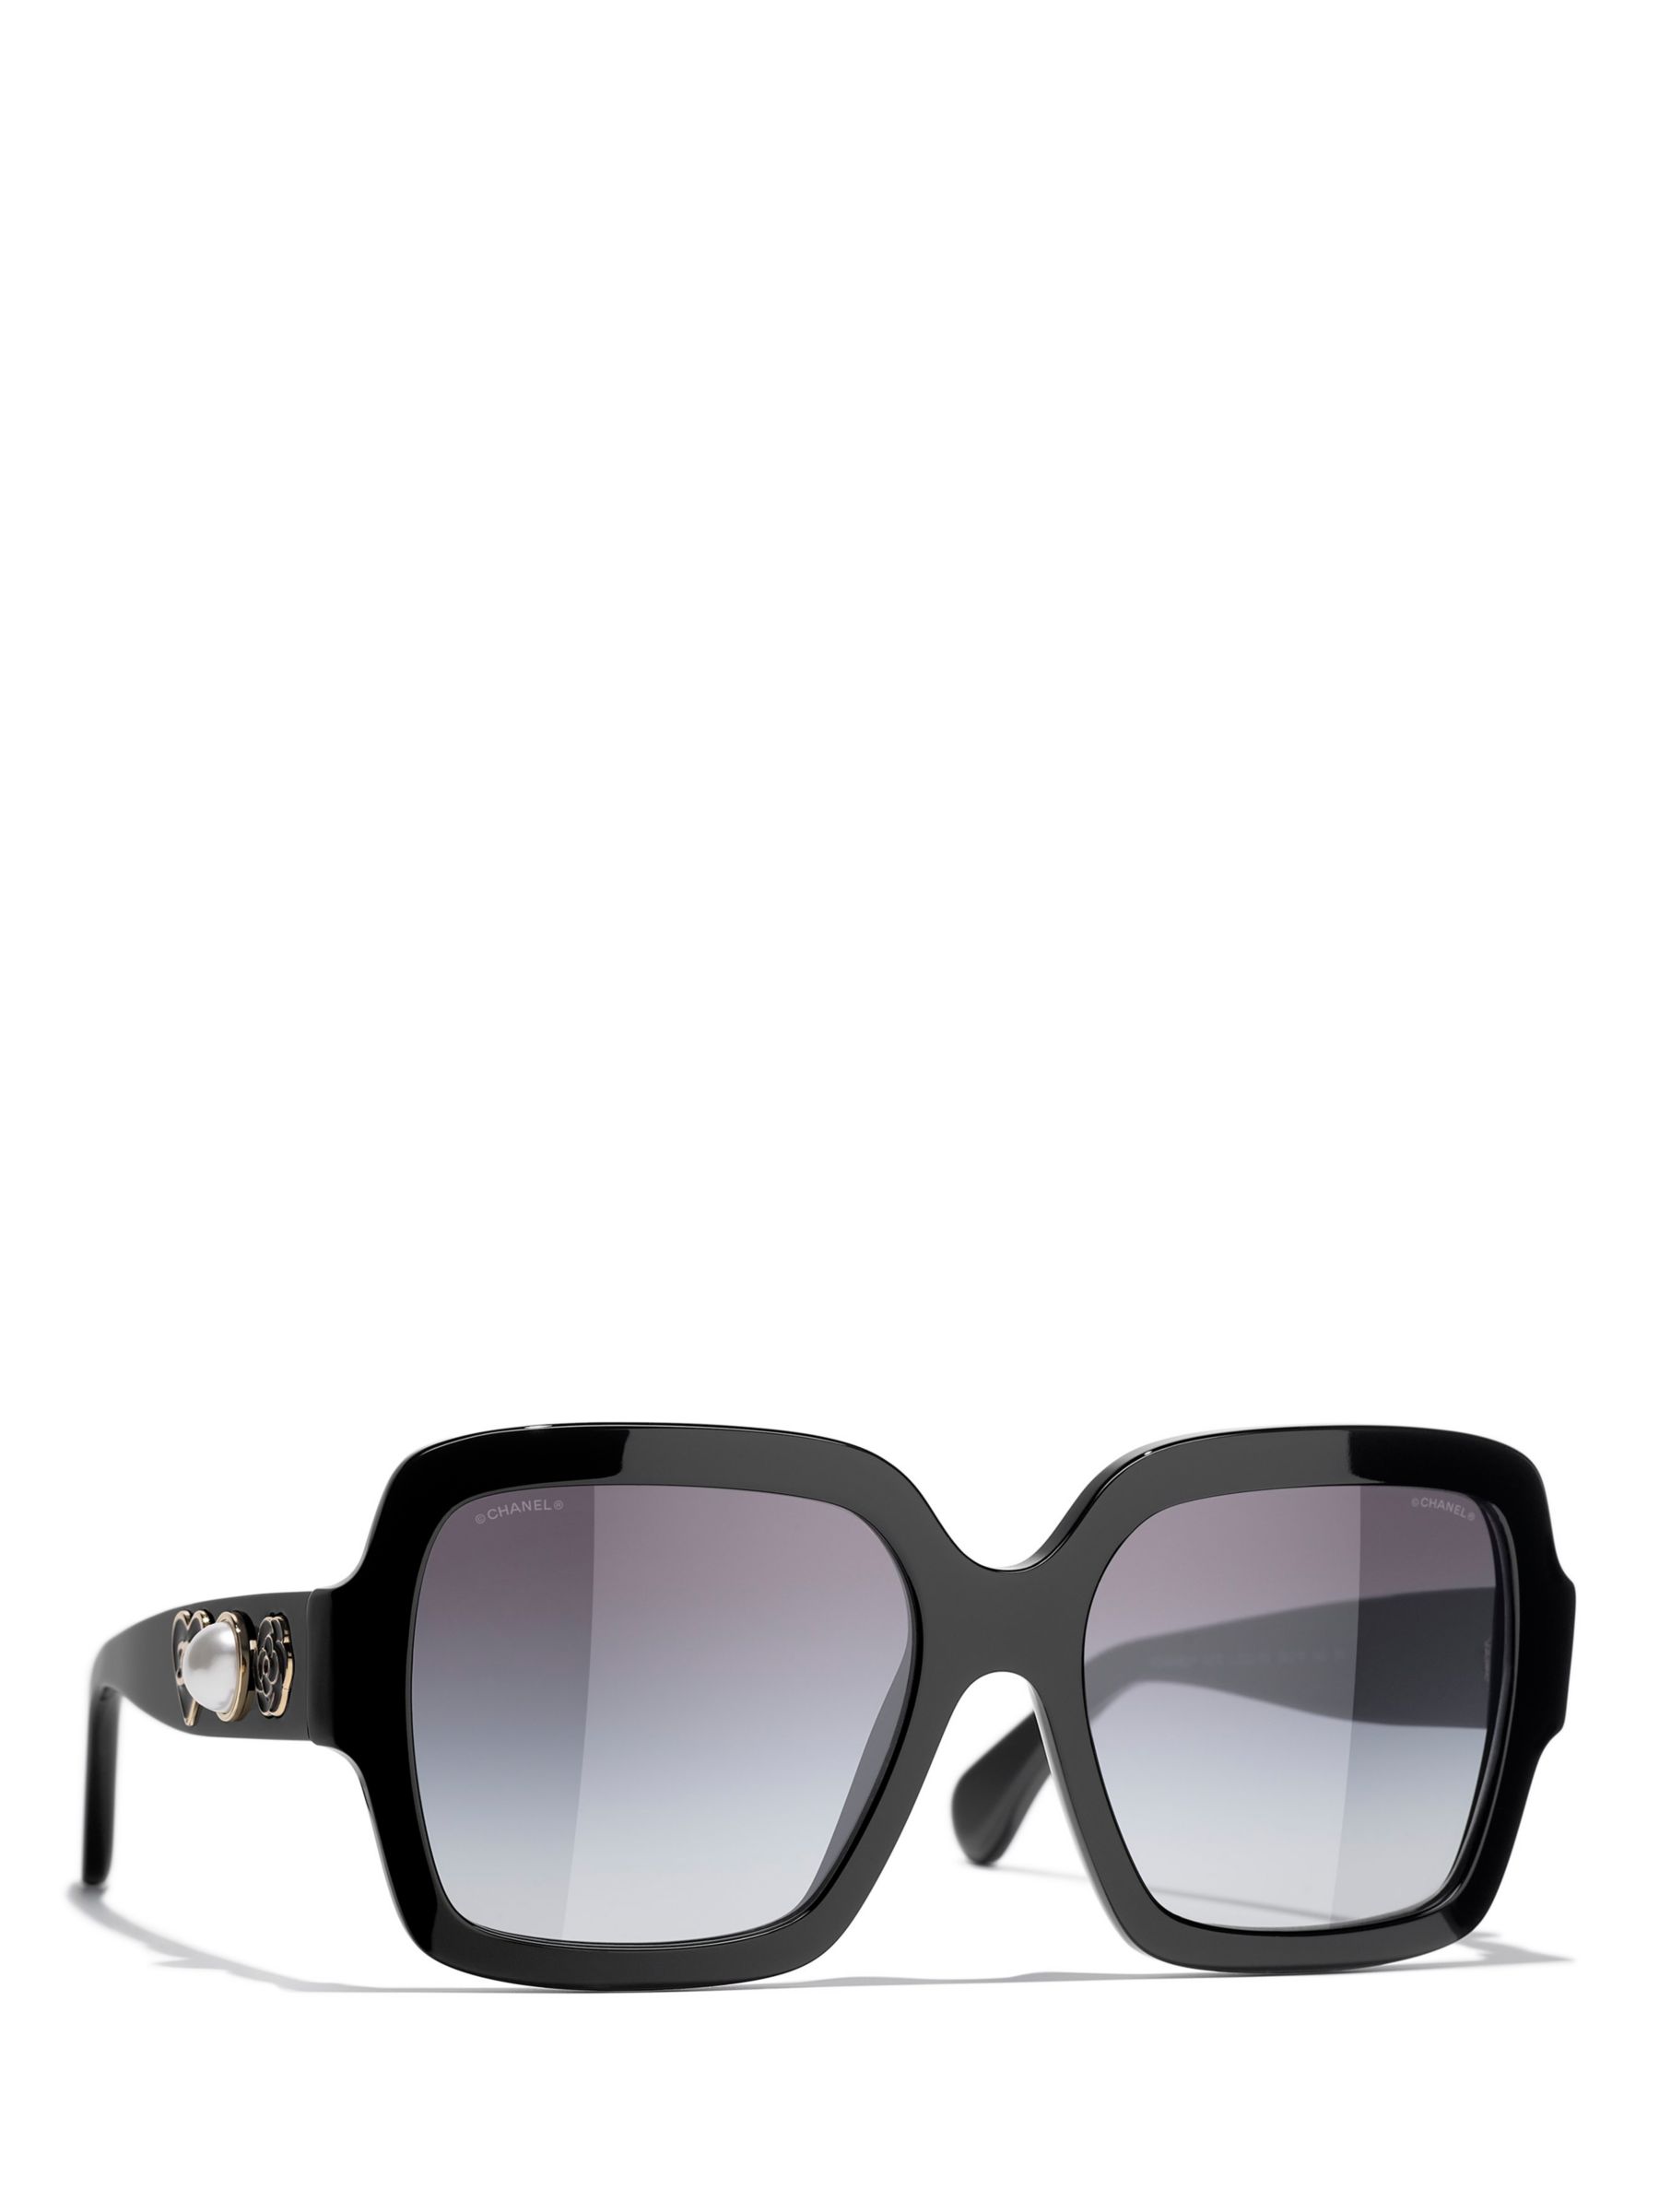 CHANEL CC Logo Sunglasses 5143 Black and White